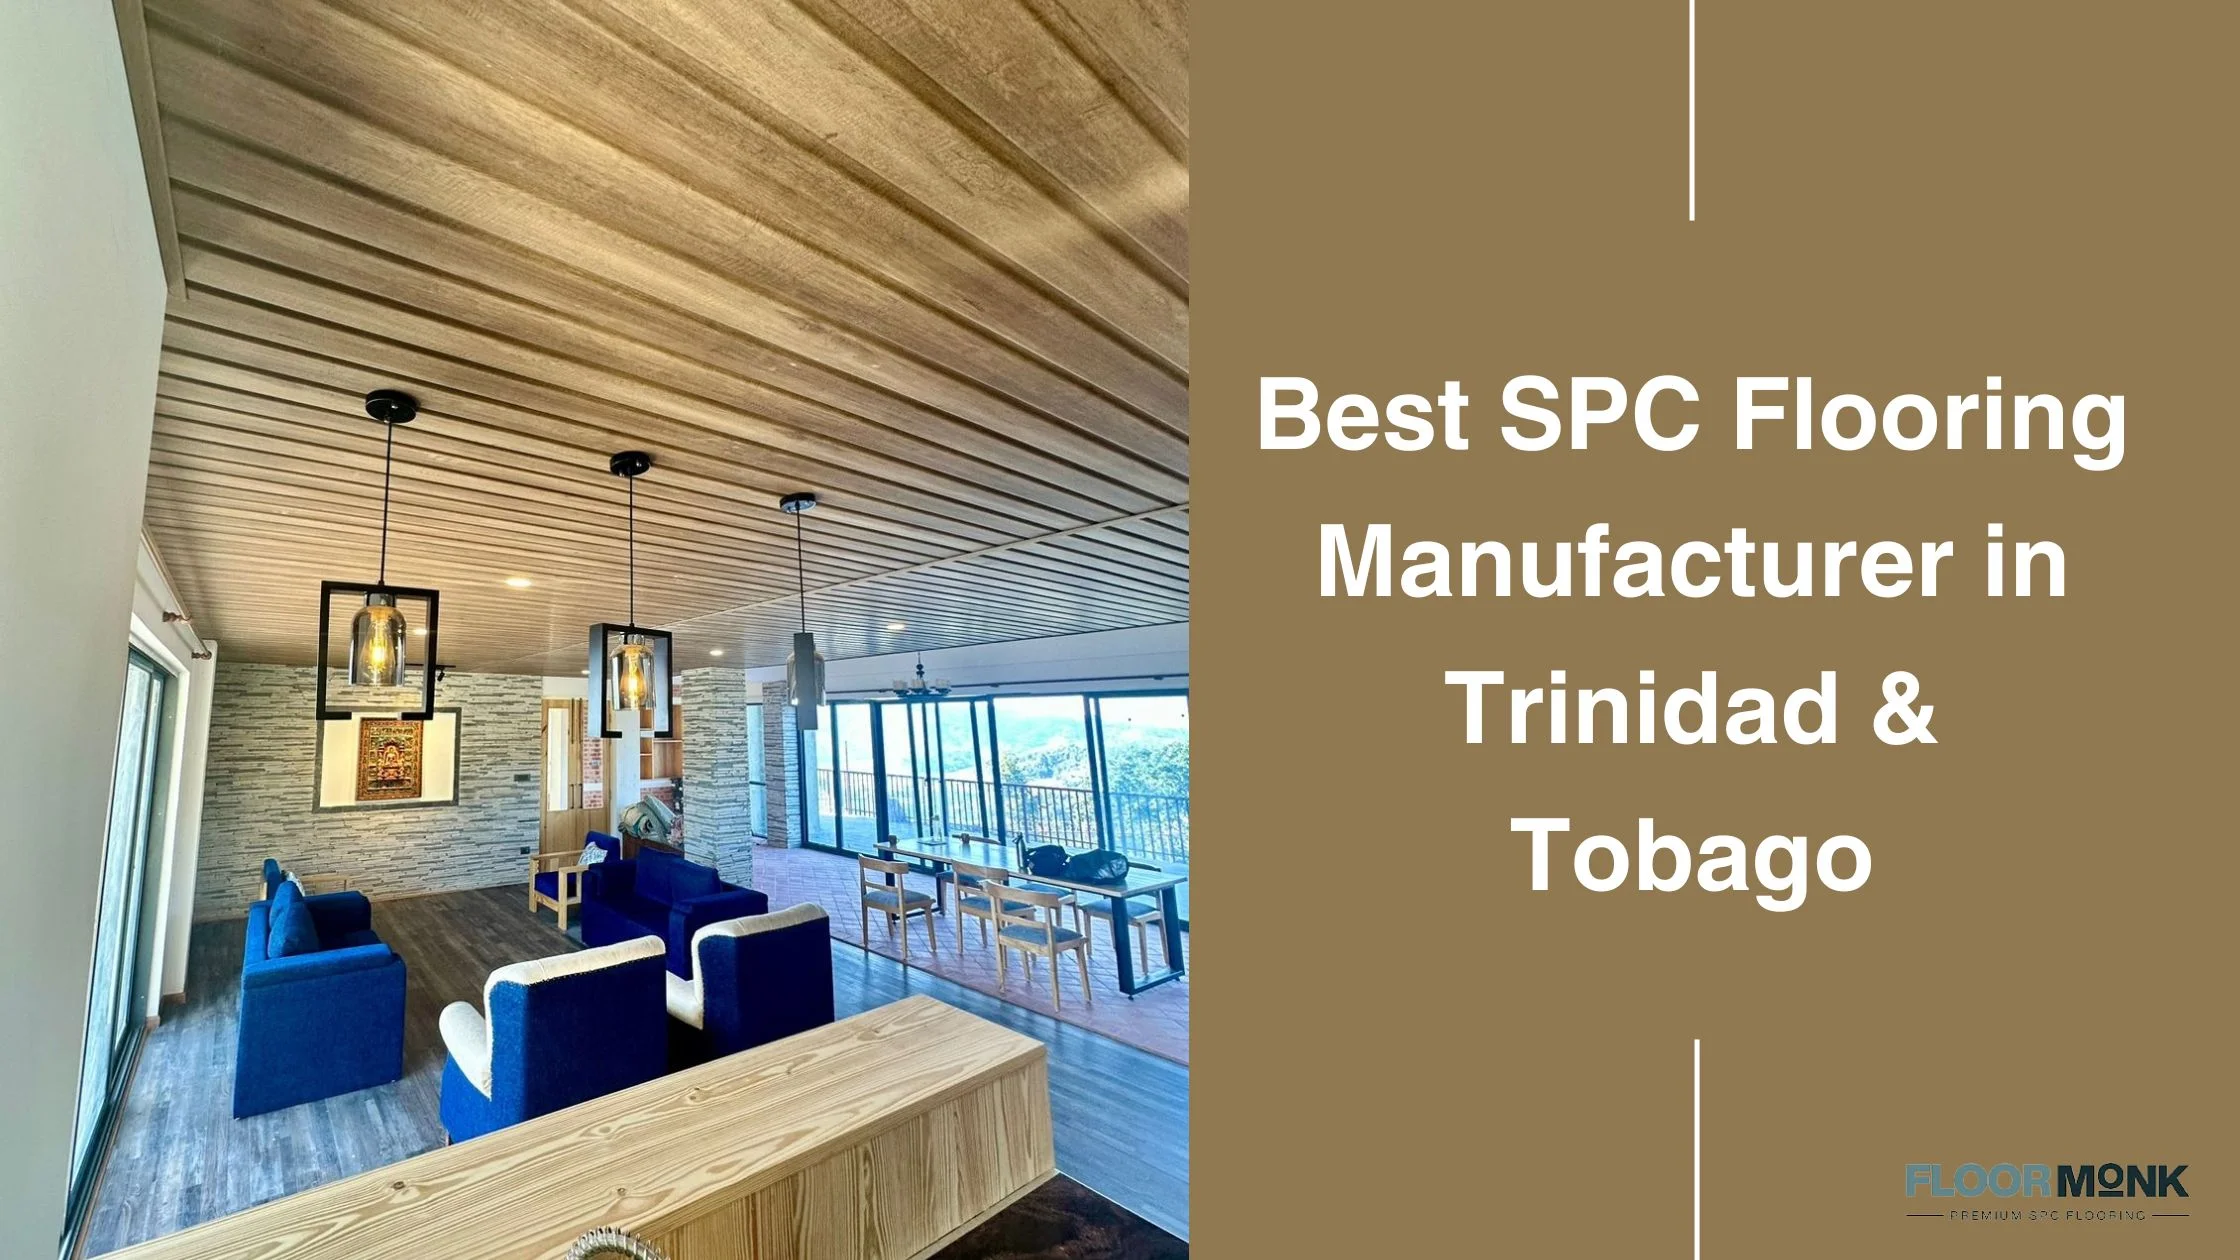 Best SPC Flooring Manufacturer In Trinidad & Tobago